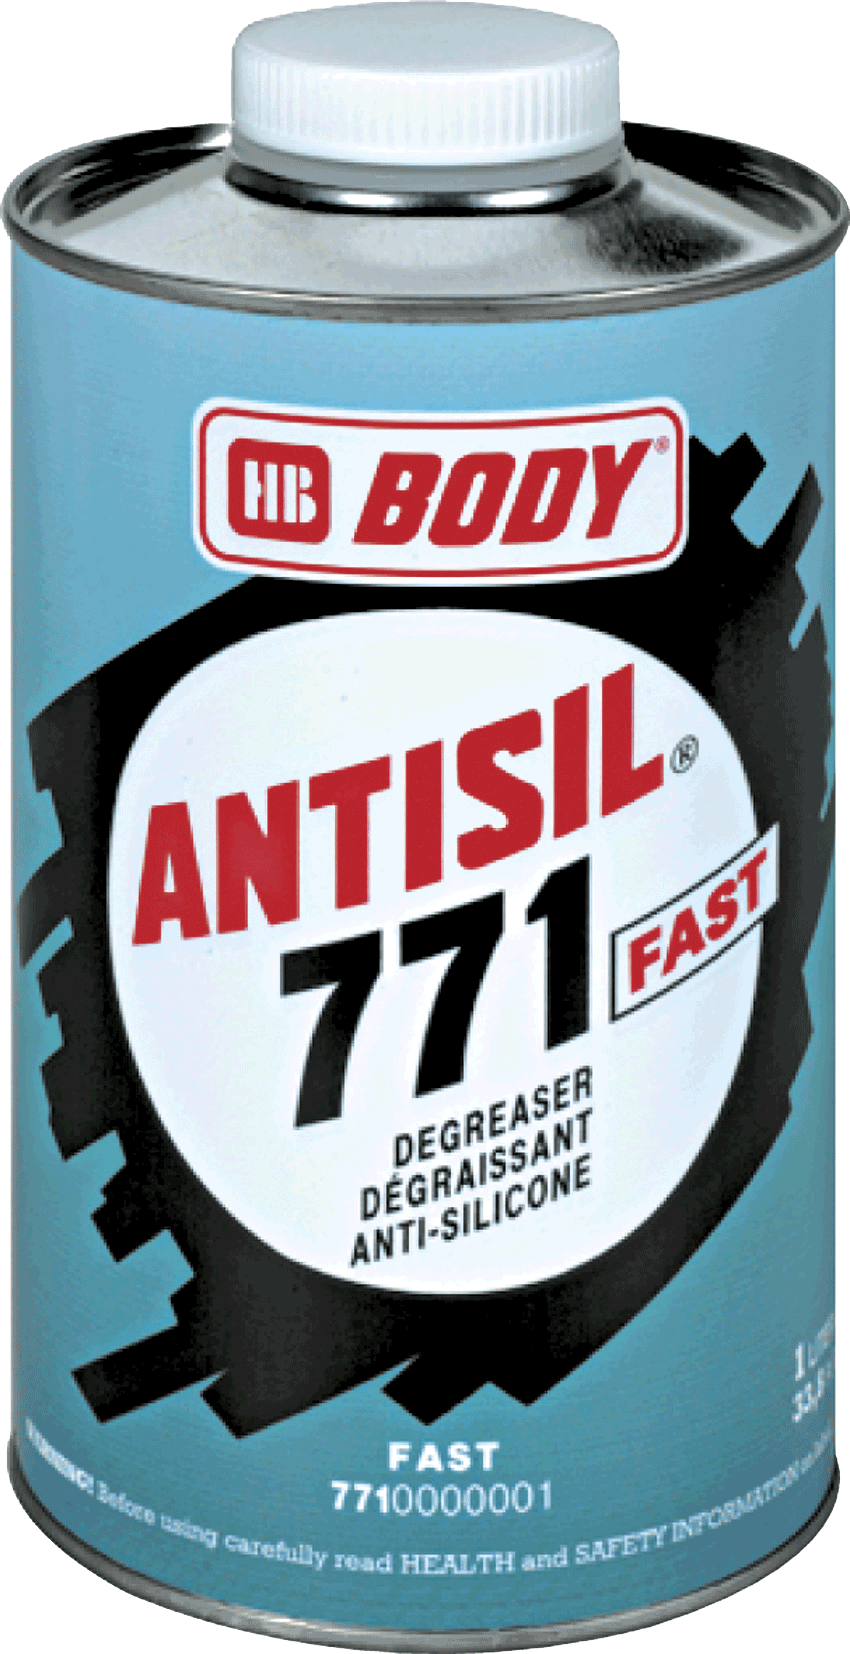 HB BODY Body 771 Antisil fast  5L